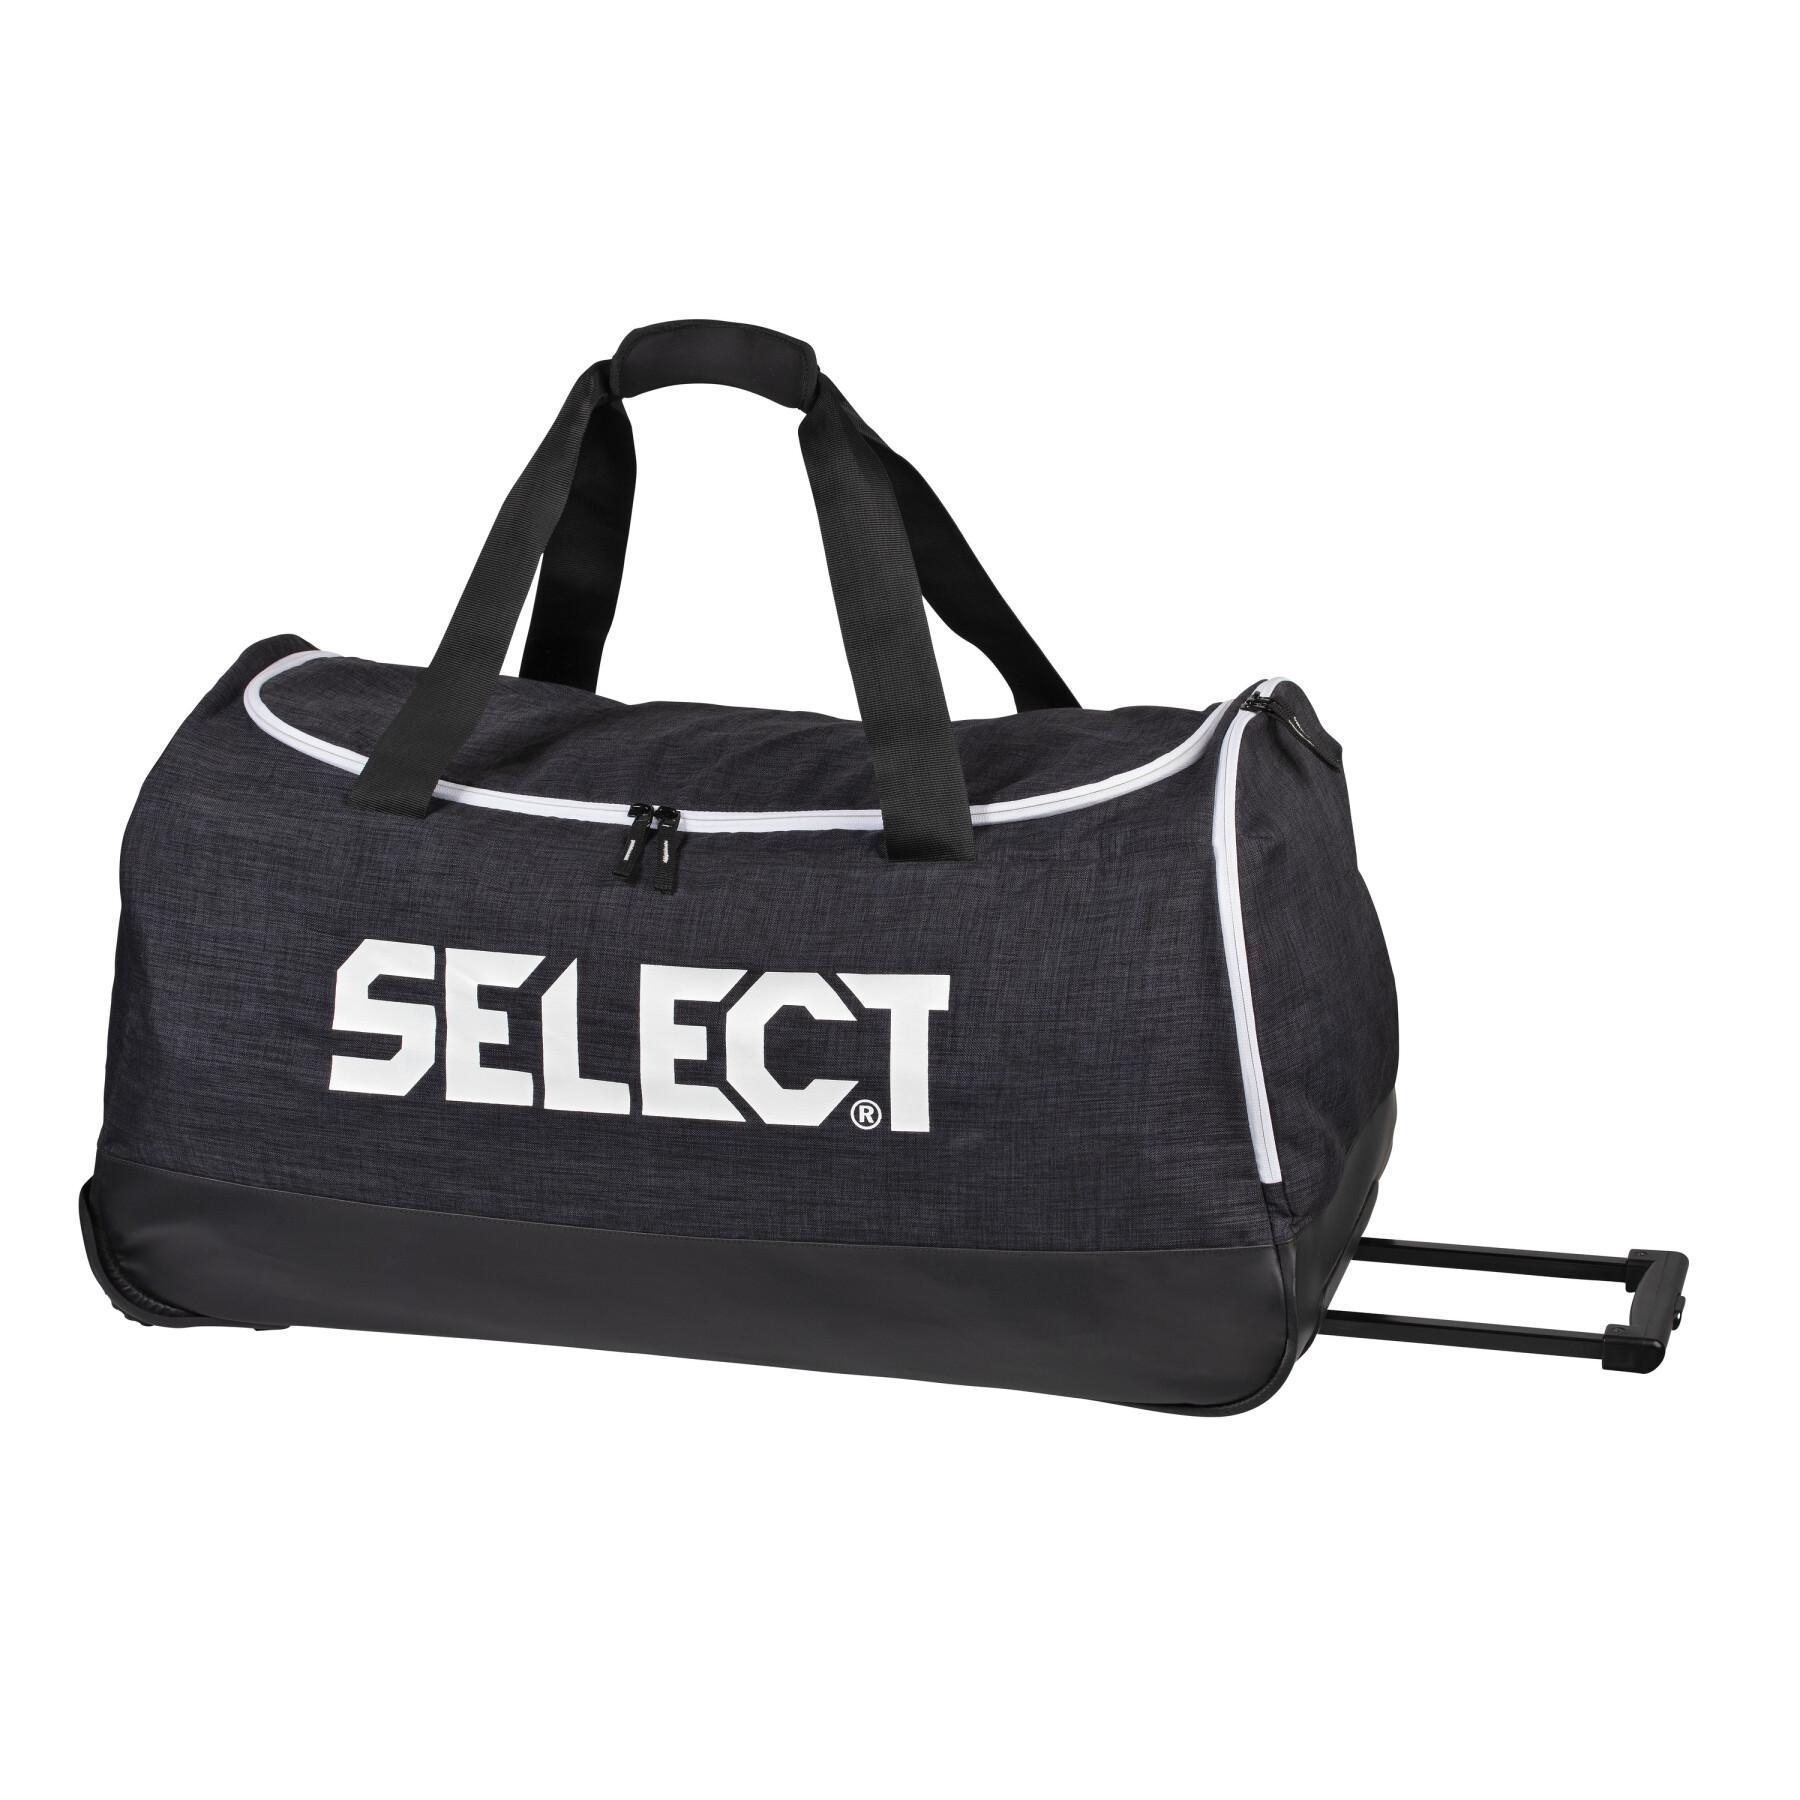 Rolling bag Select XL - Bags -